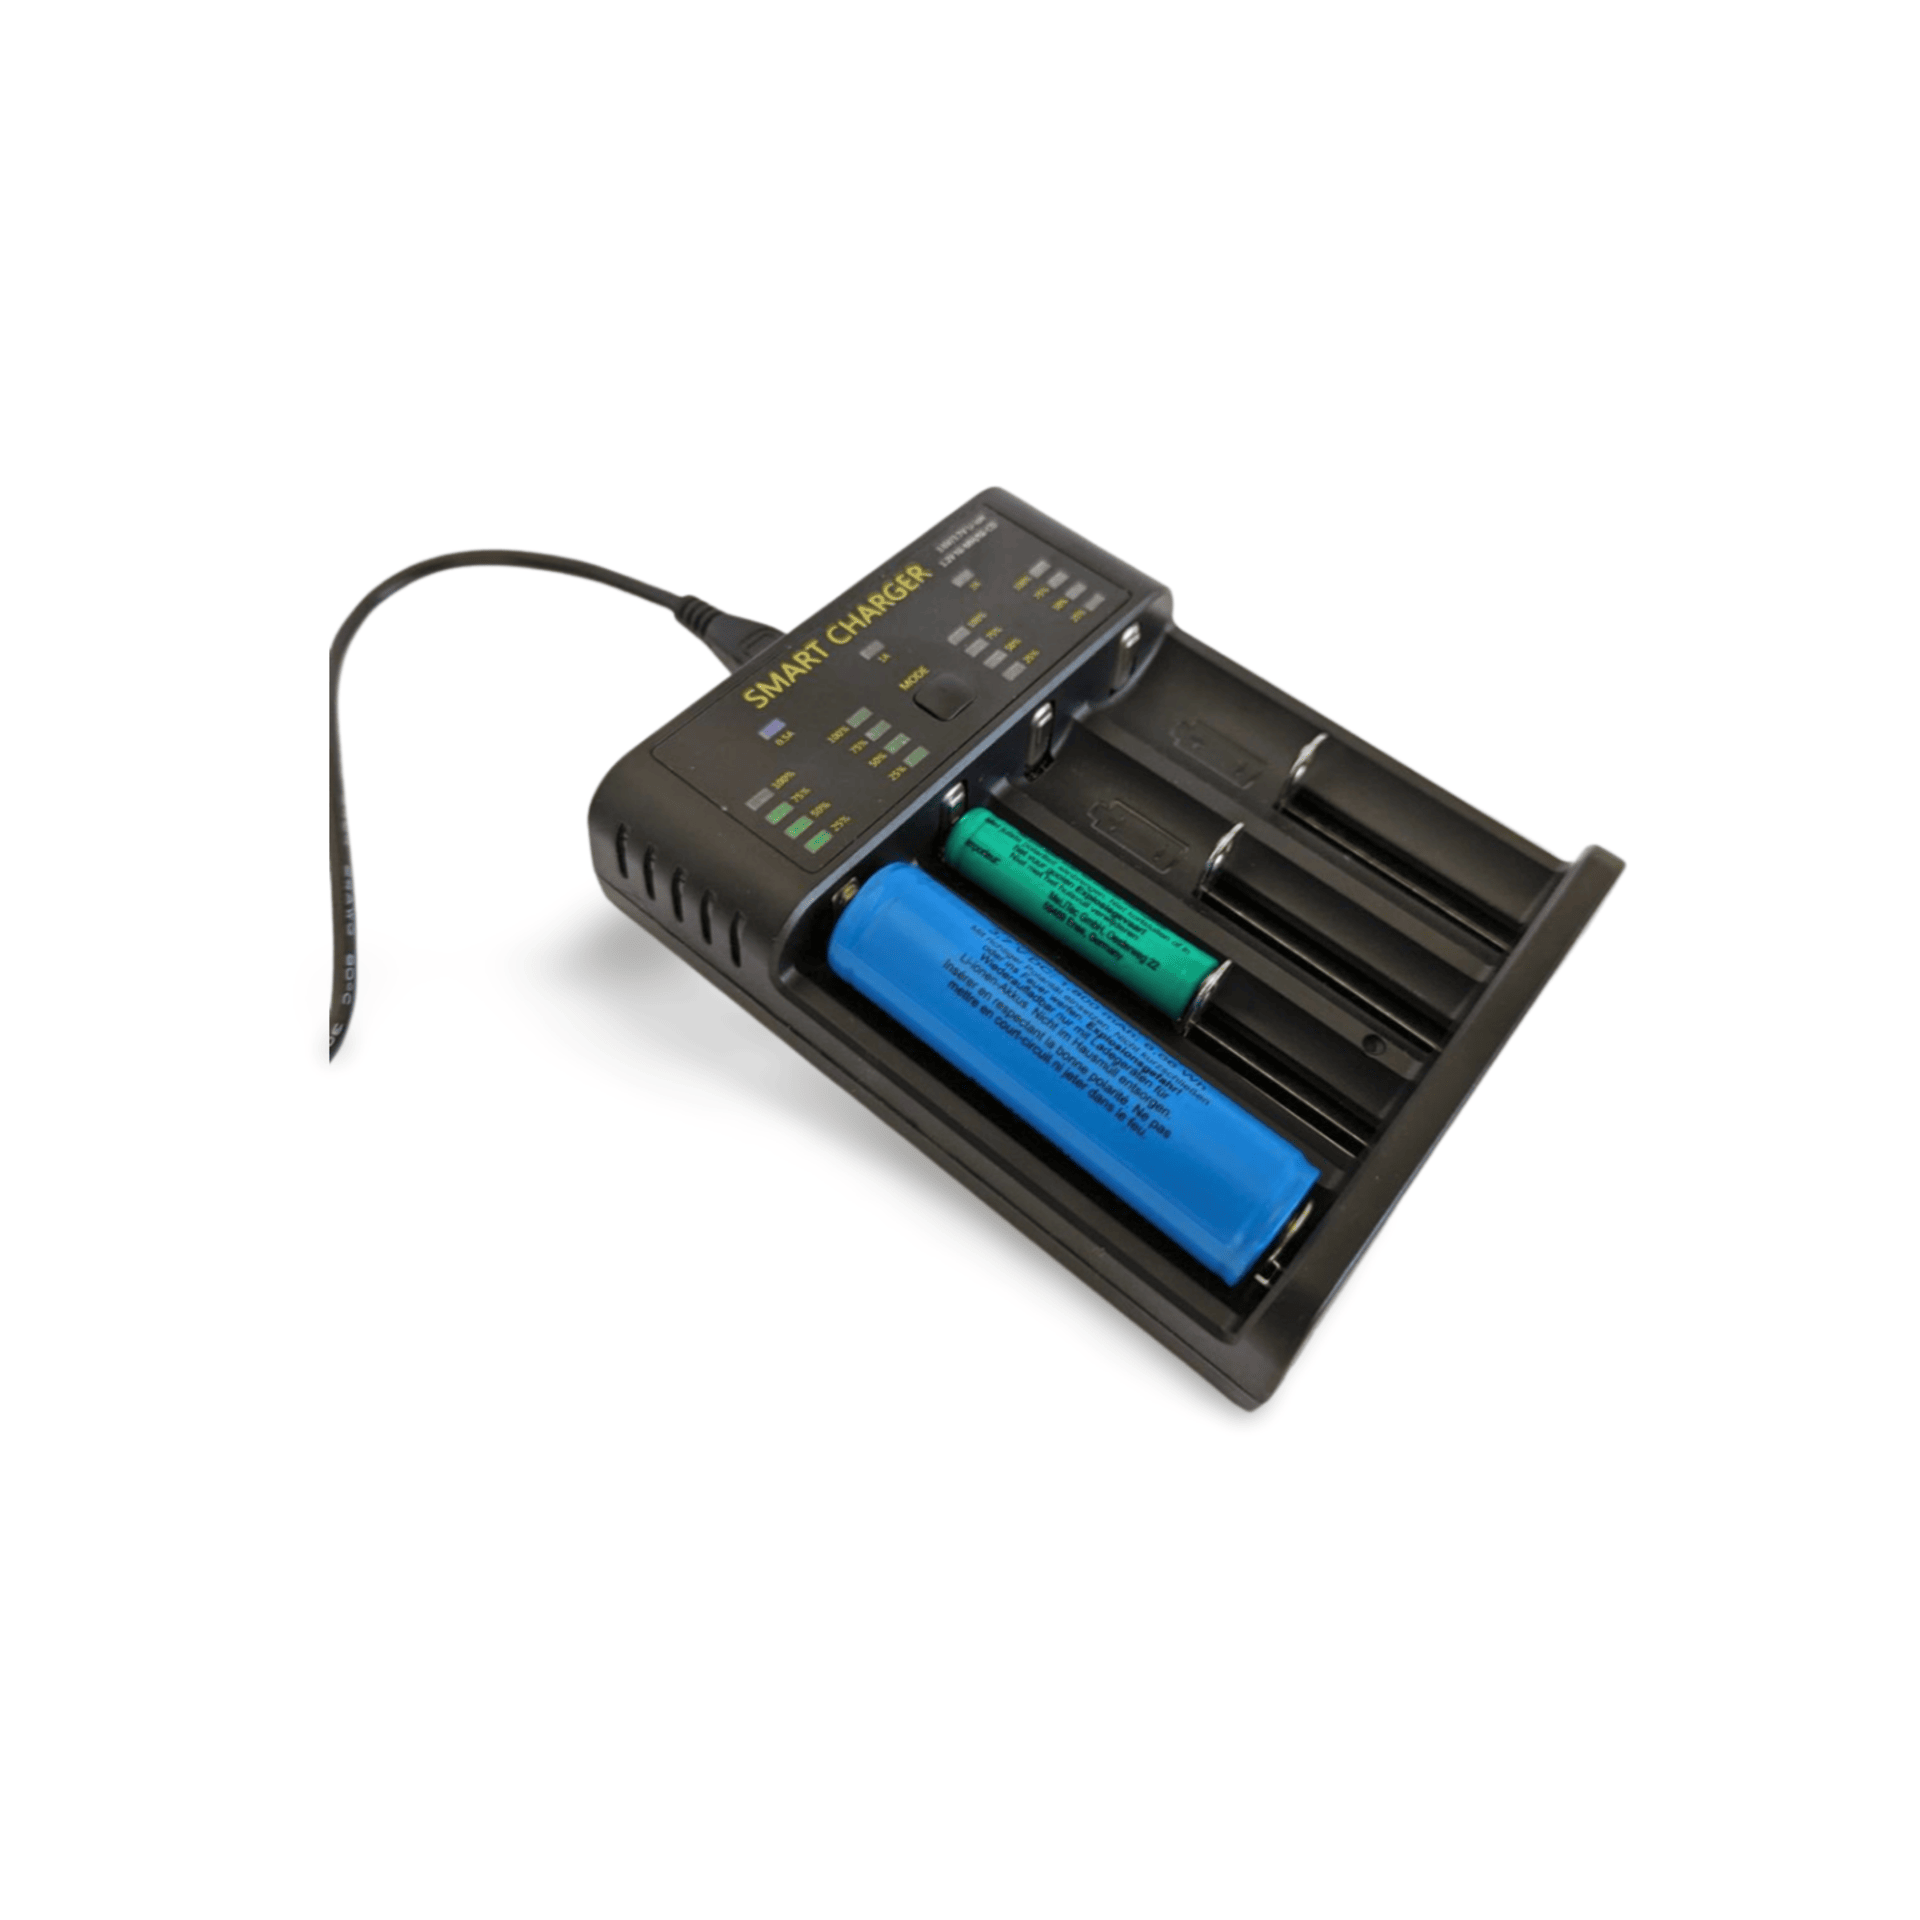  USB Ladegerät für Li-ion 3,7 V und Ni-MH/Ni-CD 1,2 V Akkus